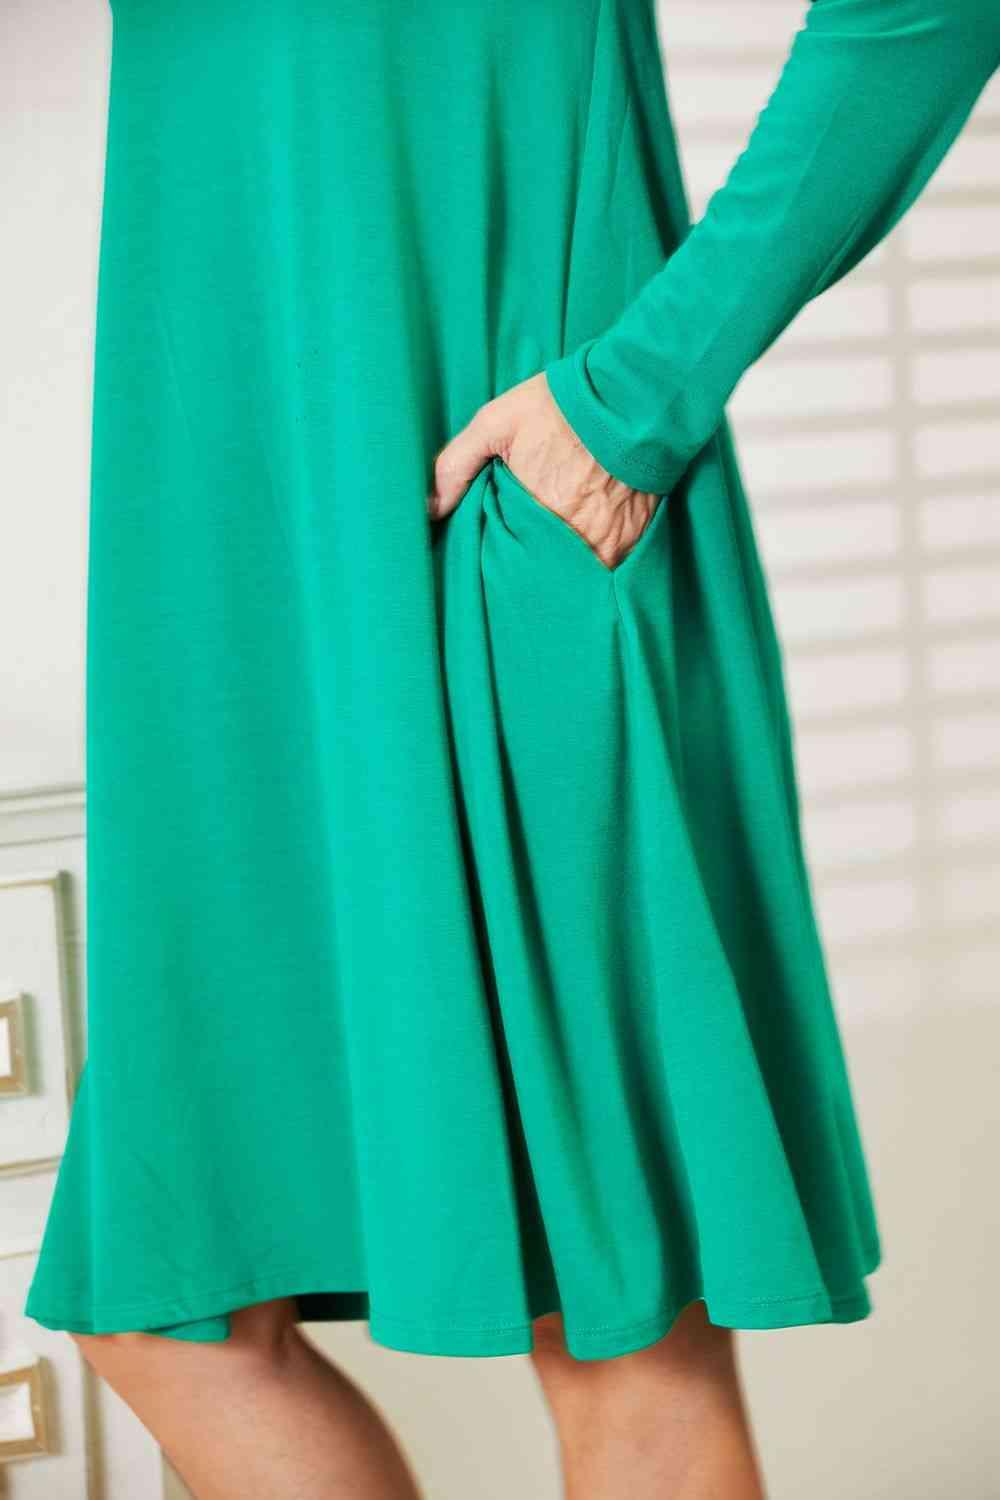 Zenana Full Size Long Sleeve Flare Dress with Pockets - AMIClubwear